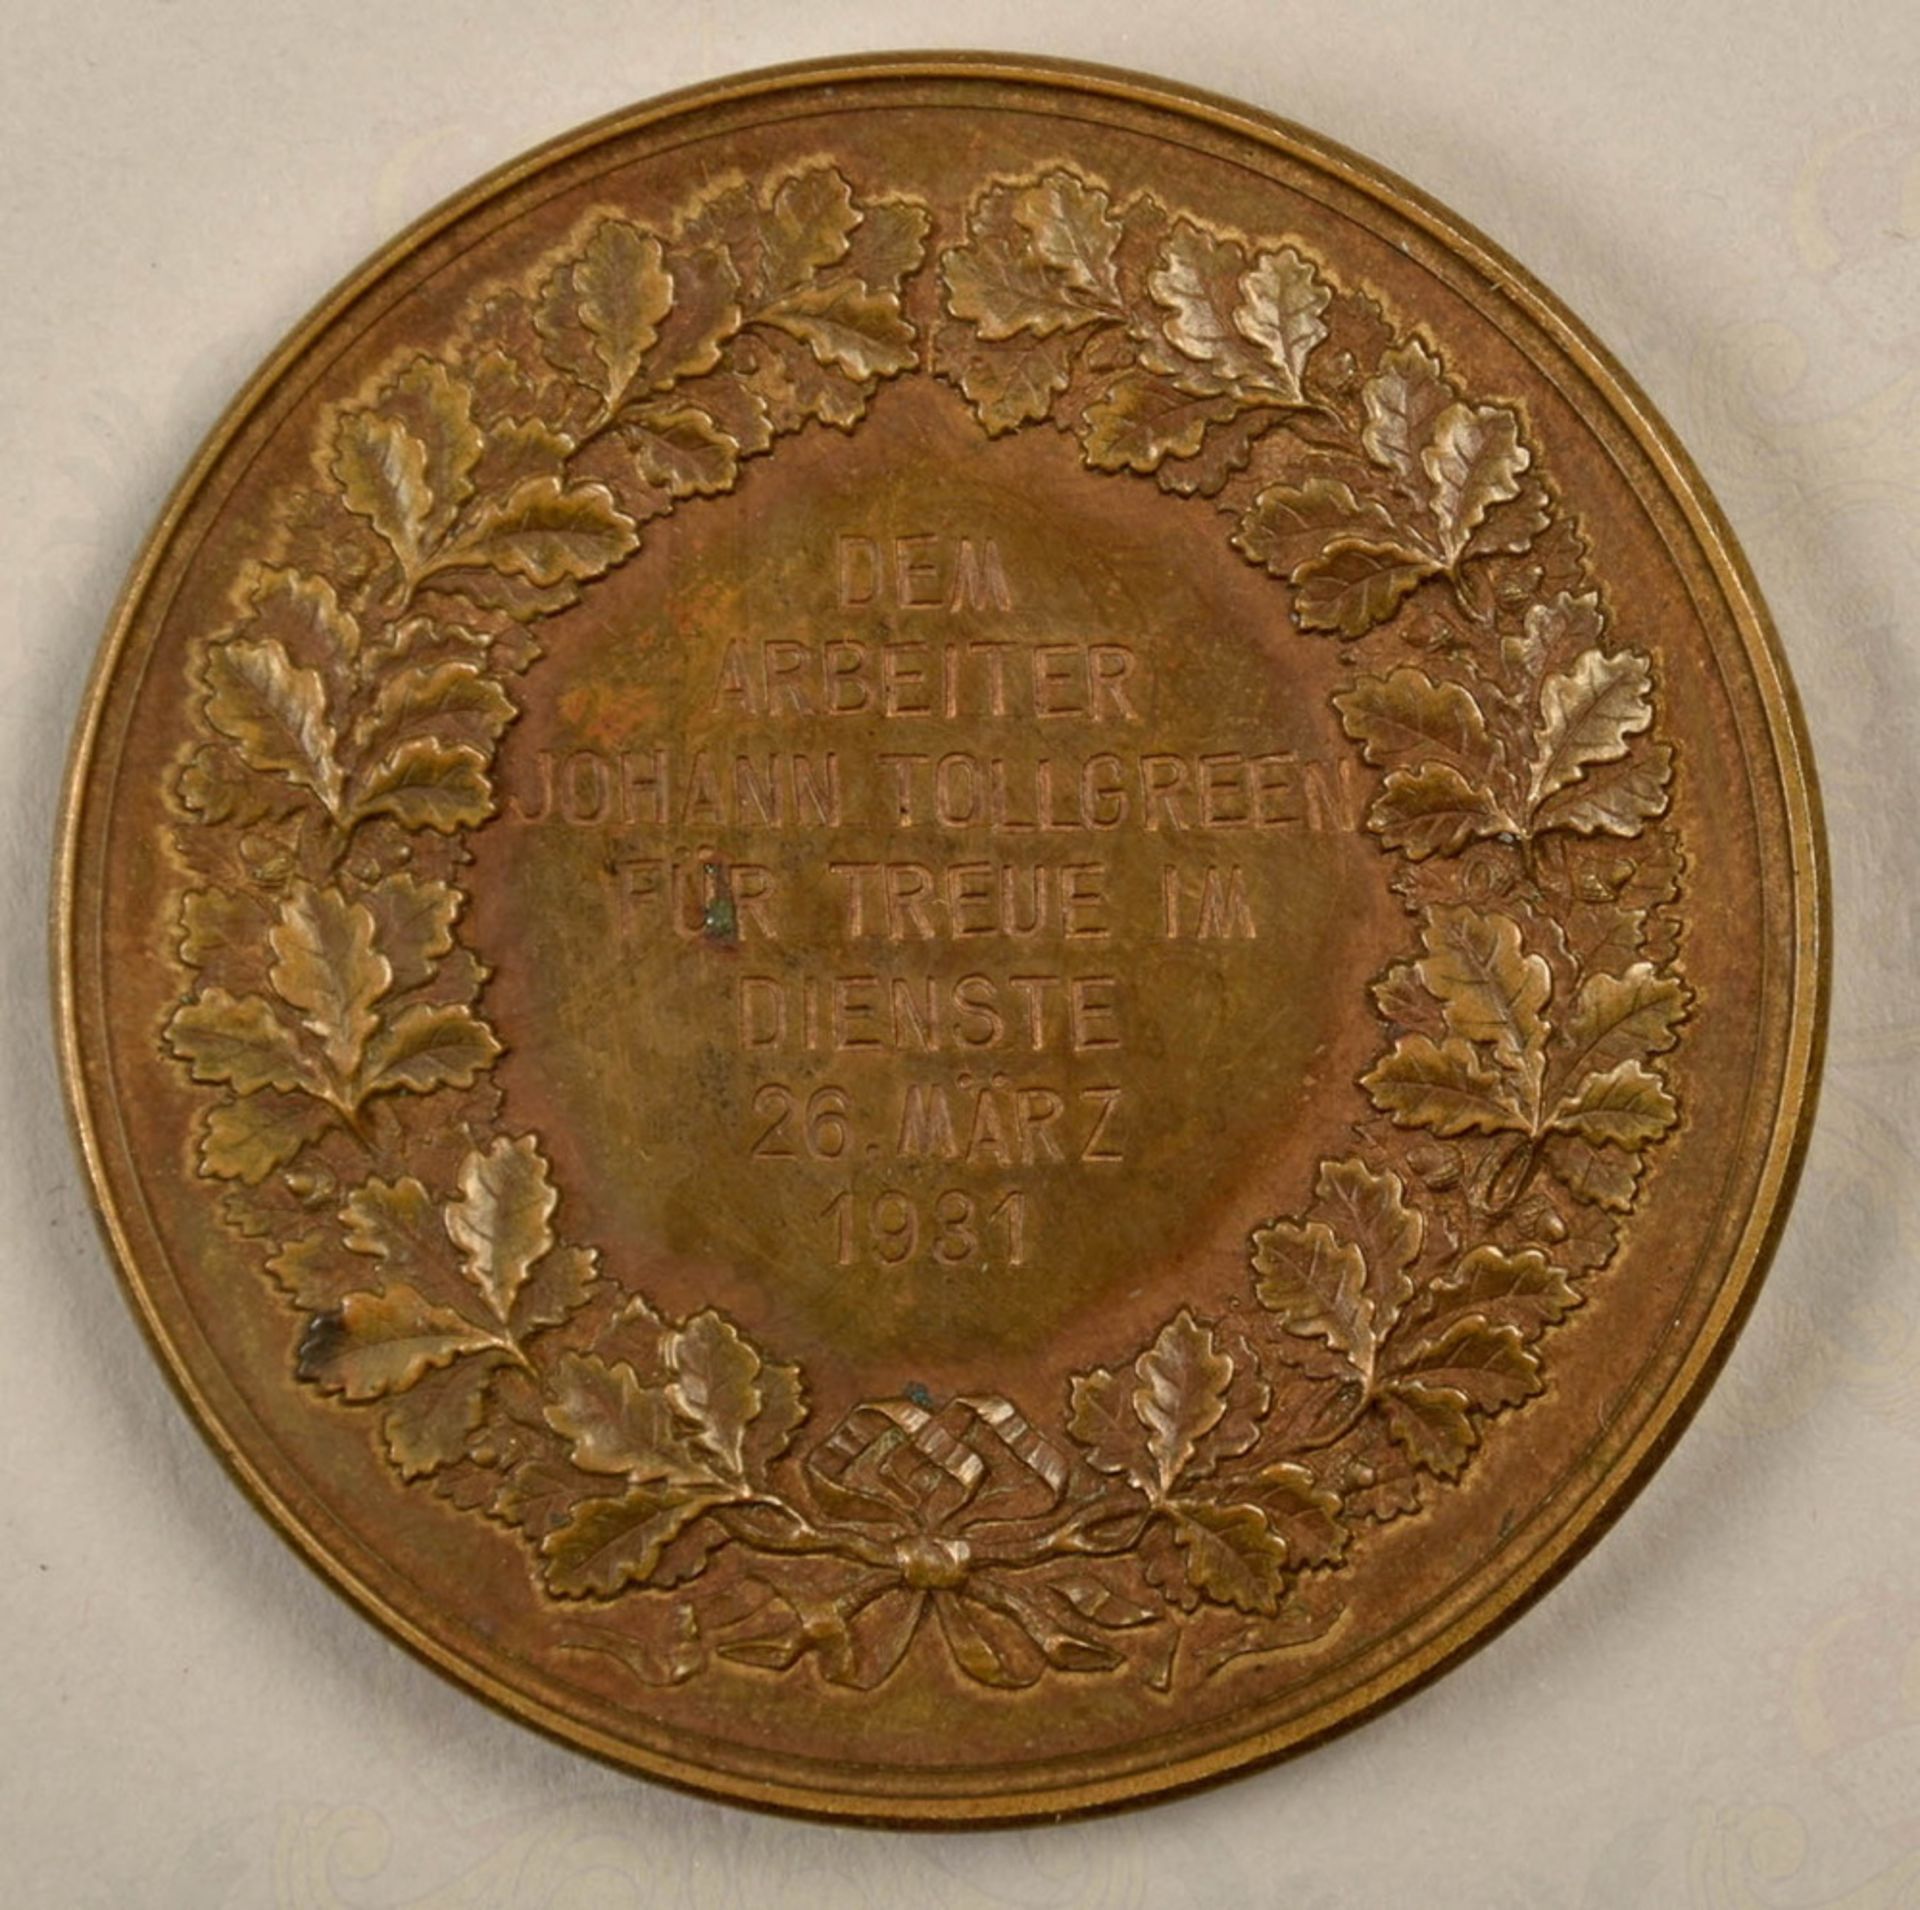 Bronze Faithful service medal Hanseatic city of Lübeck 1931 - Image 2 of 2